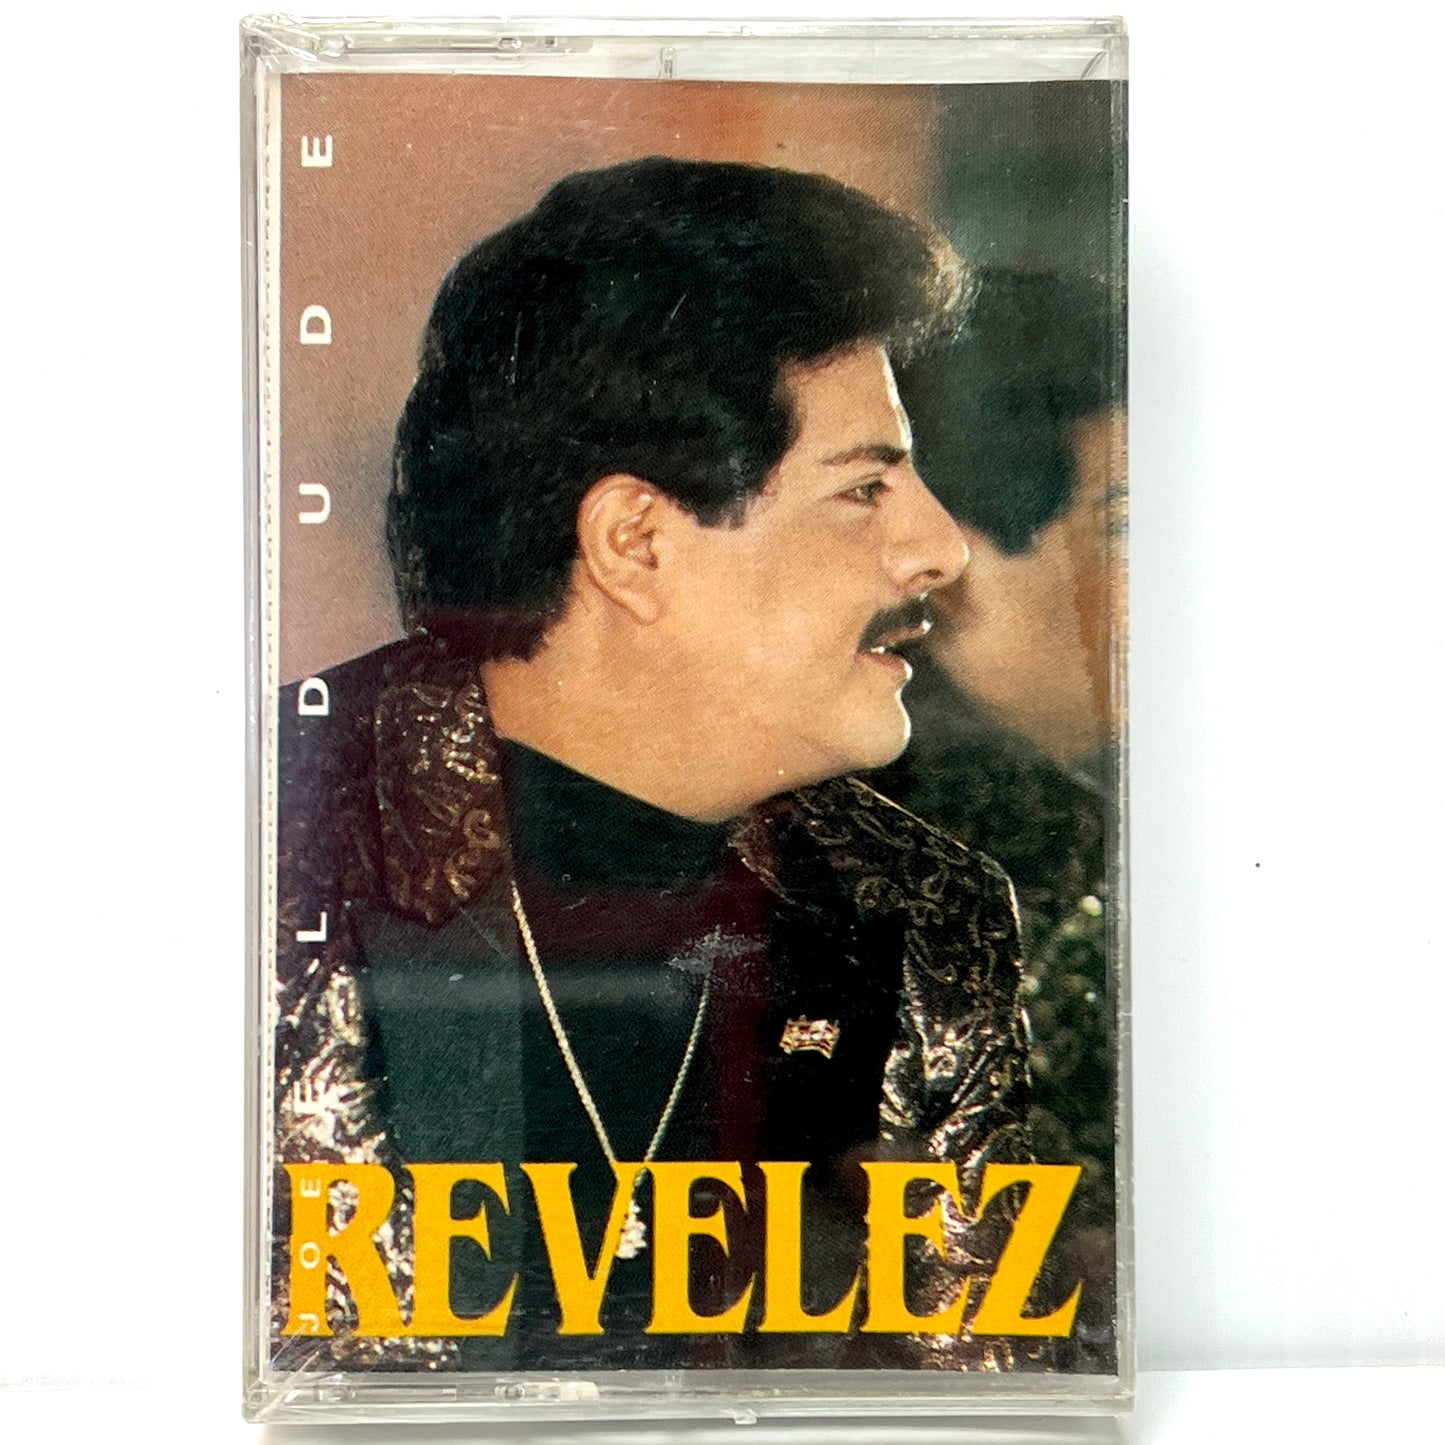 Joe Revelez - El Dude (Cassette)